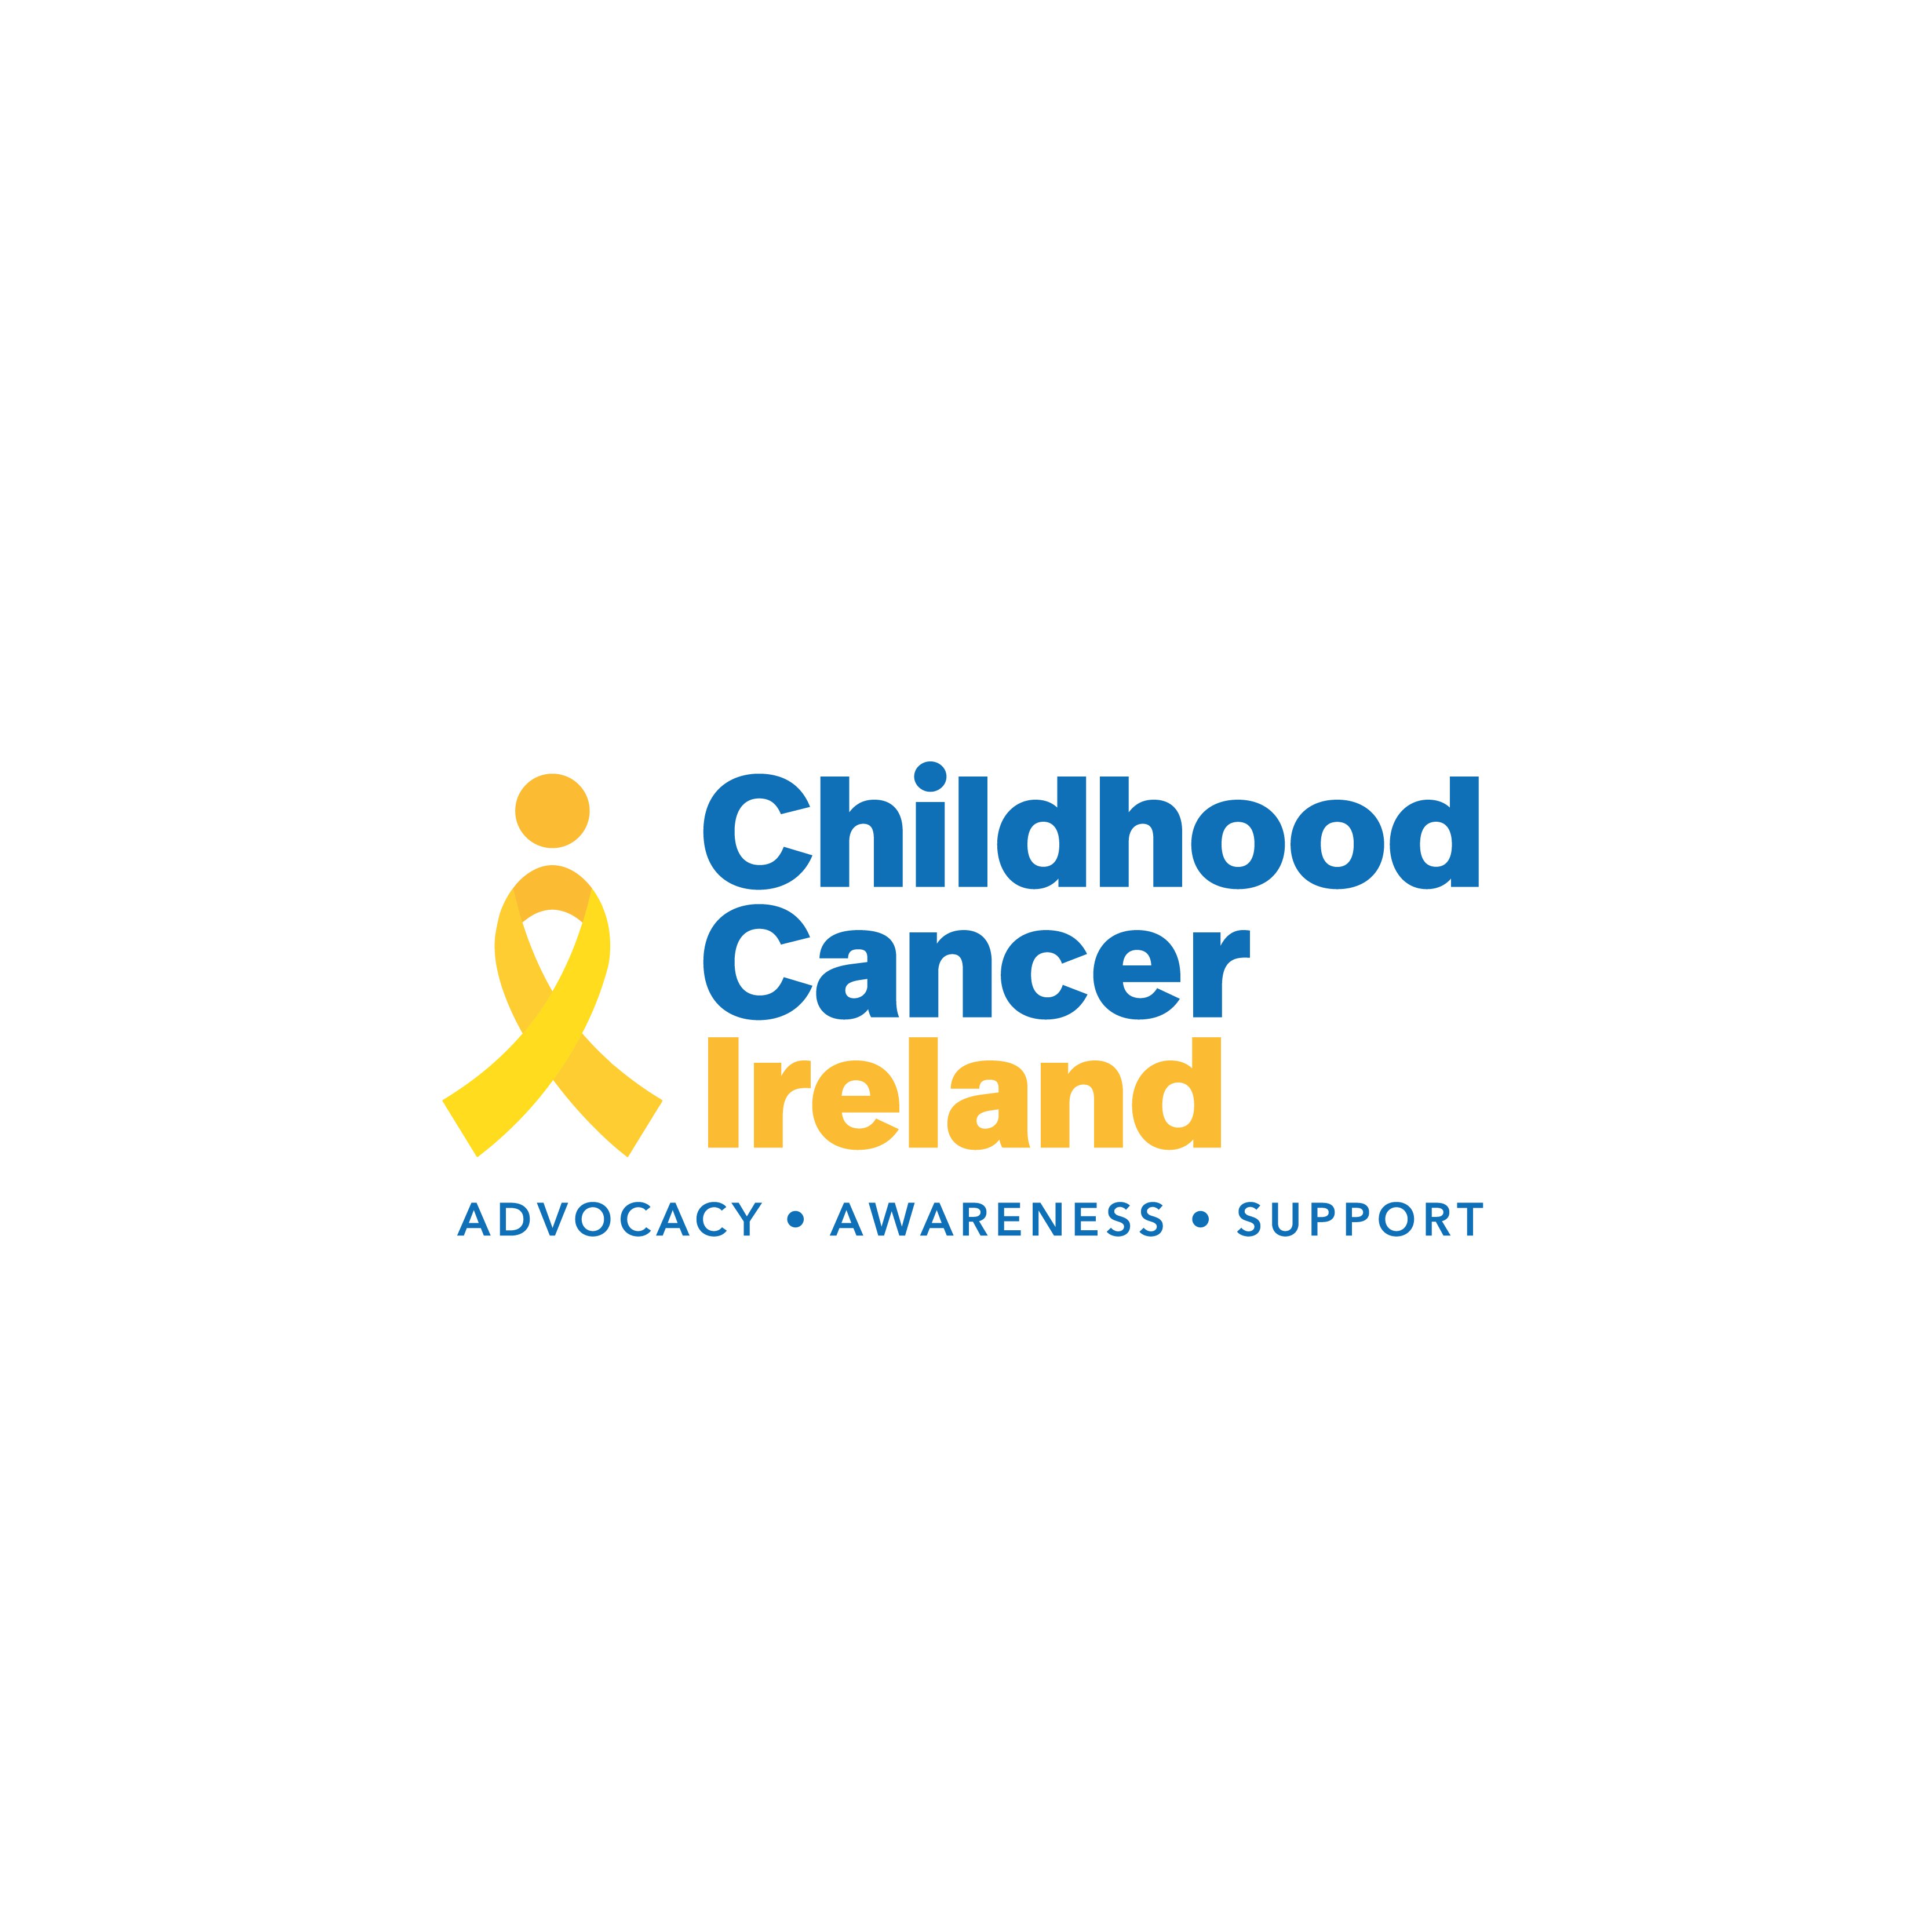 Childhood Cancer Ireland